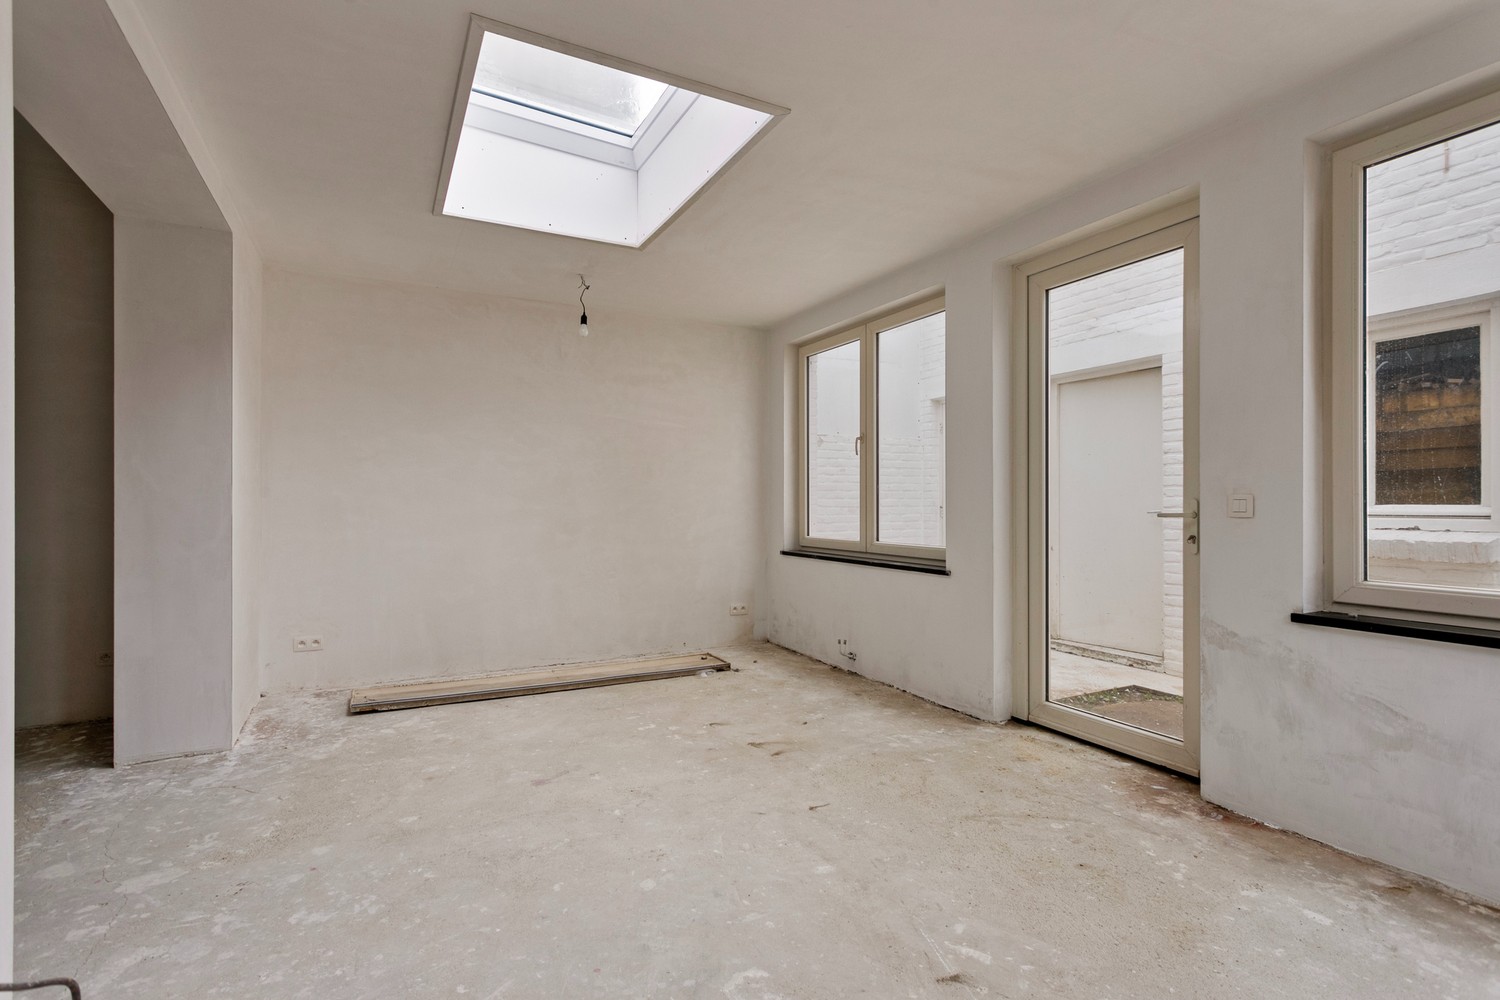 Af te werken woning met vier slaapkamers op een perceel van 8 are te Veldwezelt/Lanaken foto 9